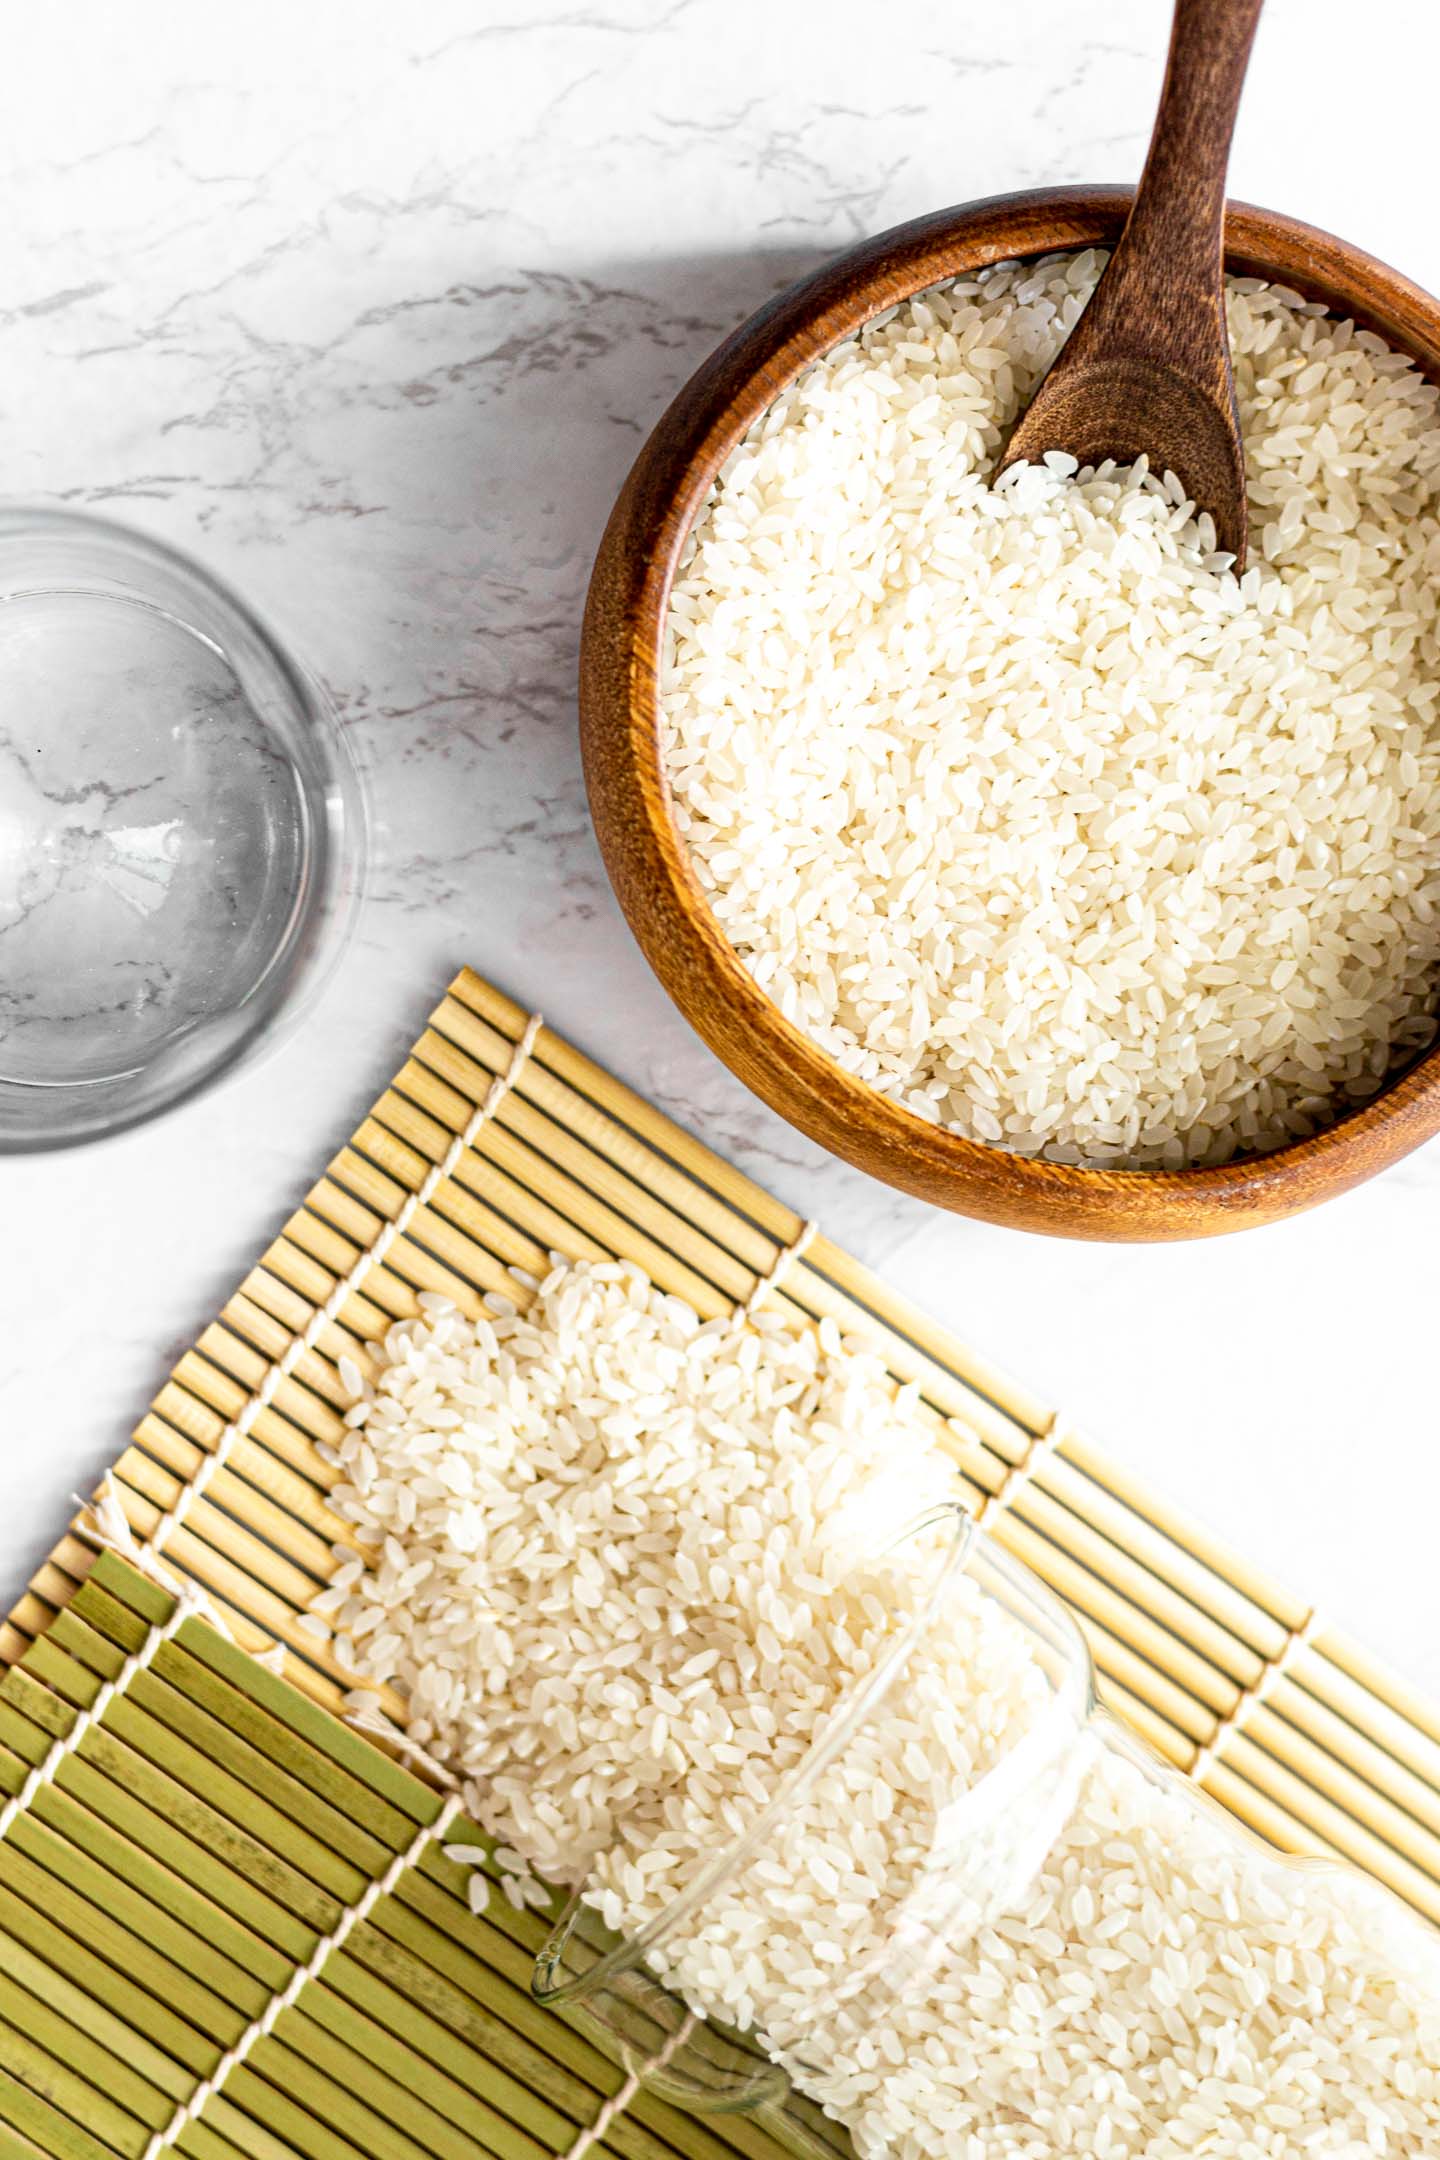 https://izumimizokawa.com/wp-content/uploads/2022/06/Instant-Pot-White-Rice-Ingredients-Vegan-Asian-Recipes-by-Izumi-Mizokawa.jpg